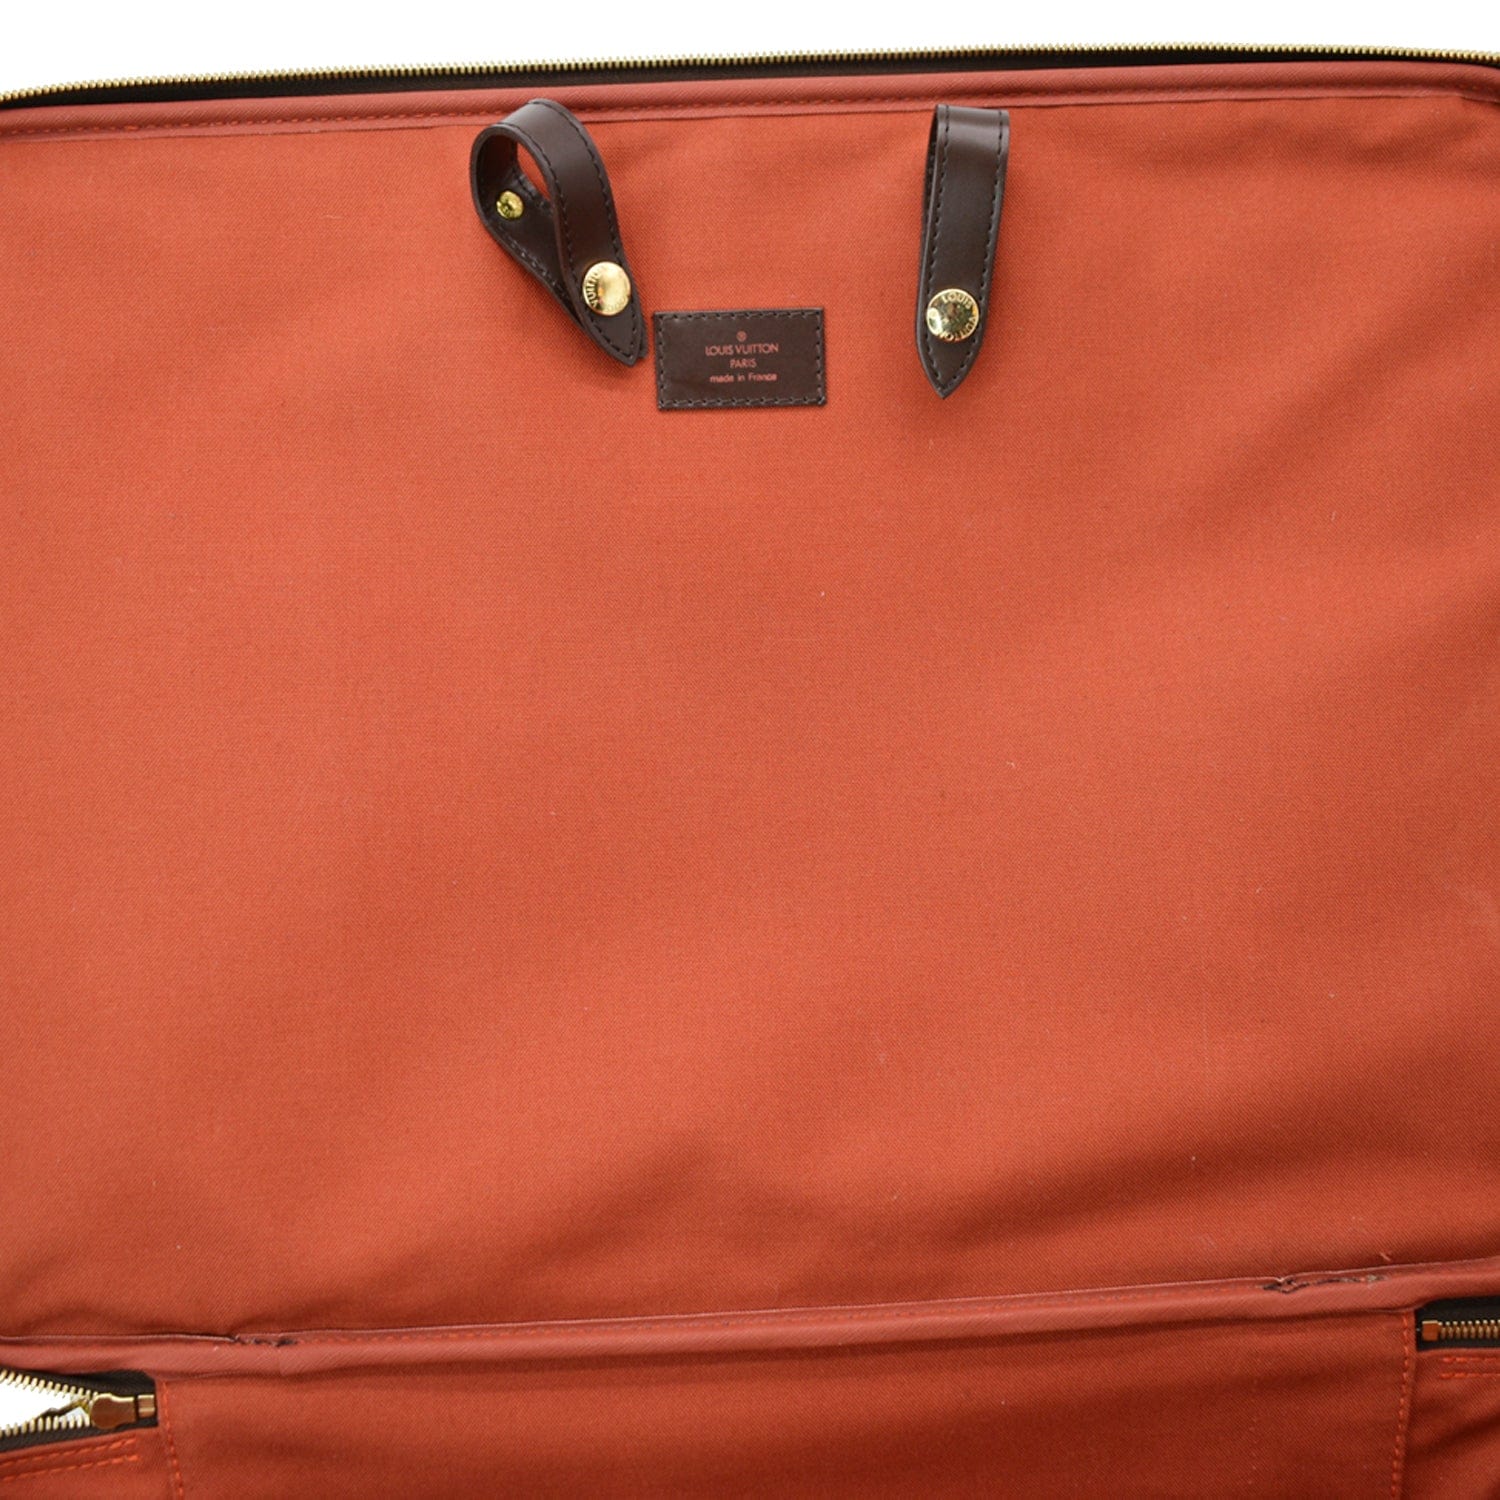 LOUIS VUITTON Pegase 55 Damier Ebene Suitcase Travel Bag Brown